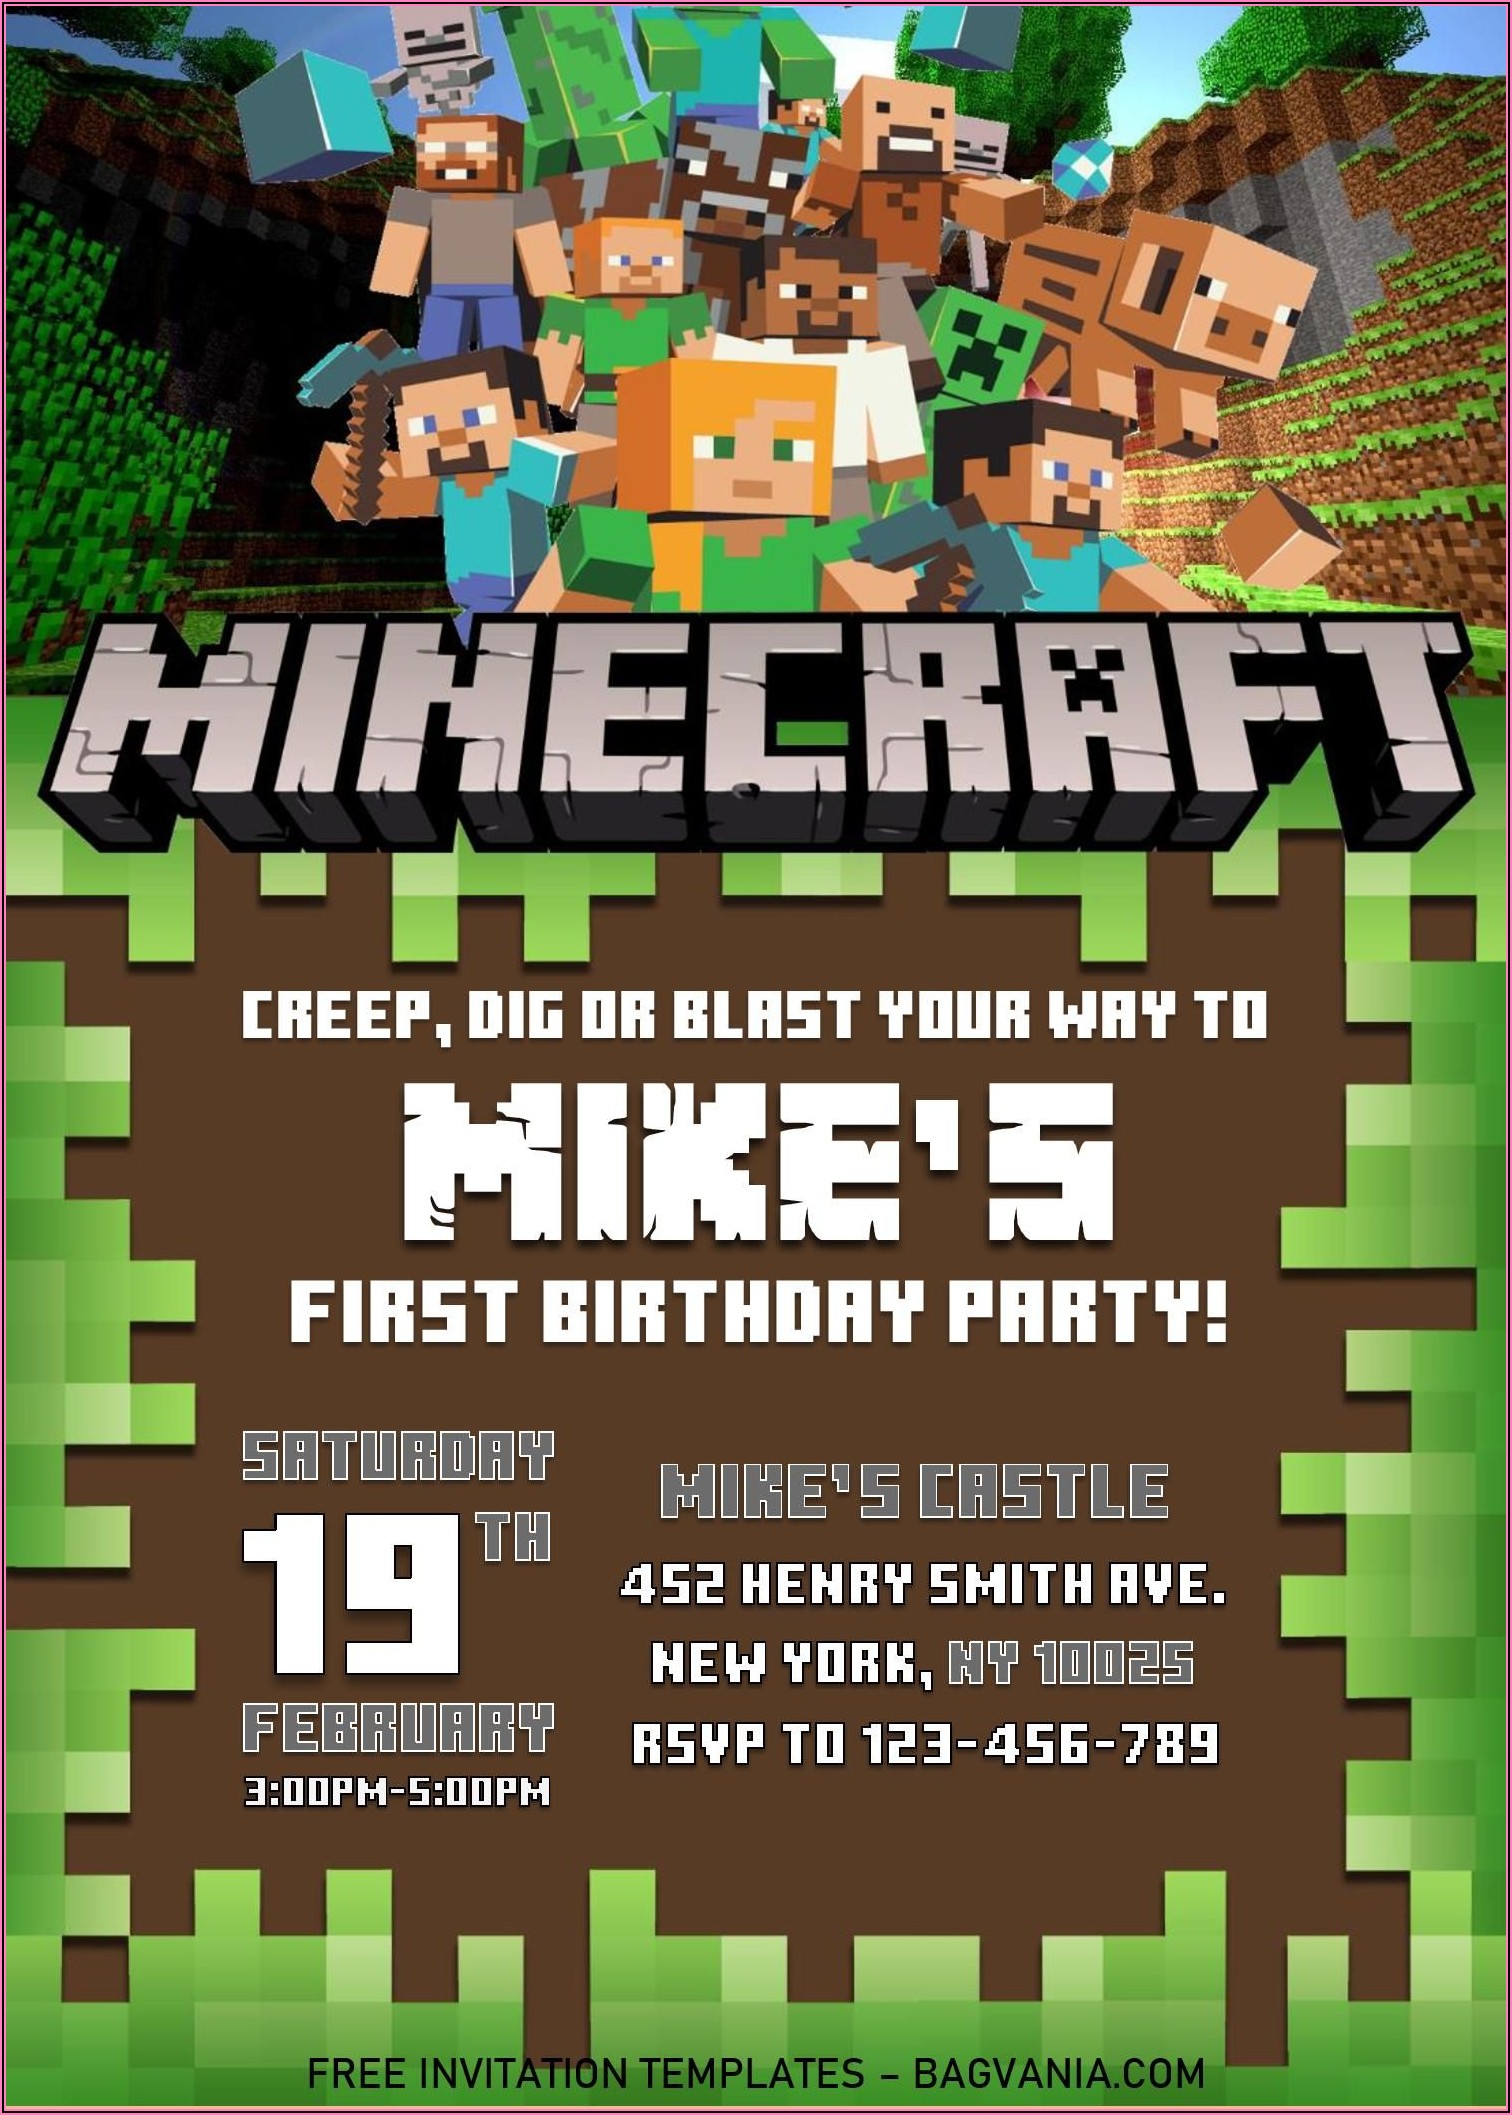 Free Personalized Minecraft Birthday Invitations